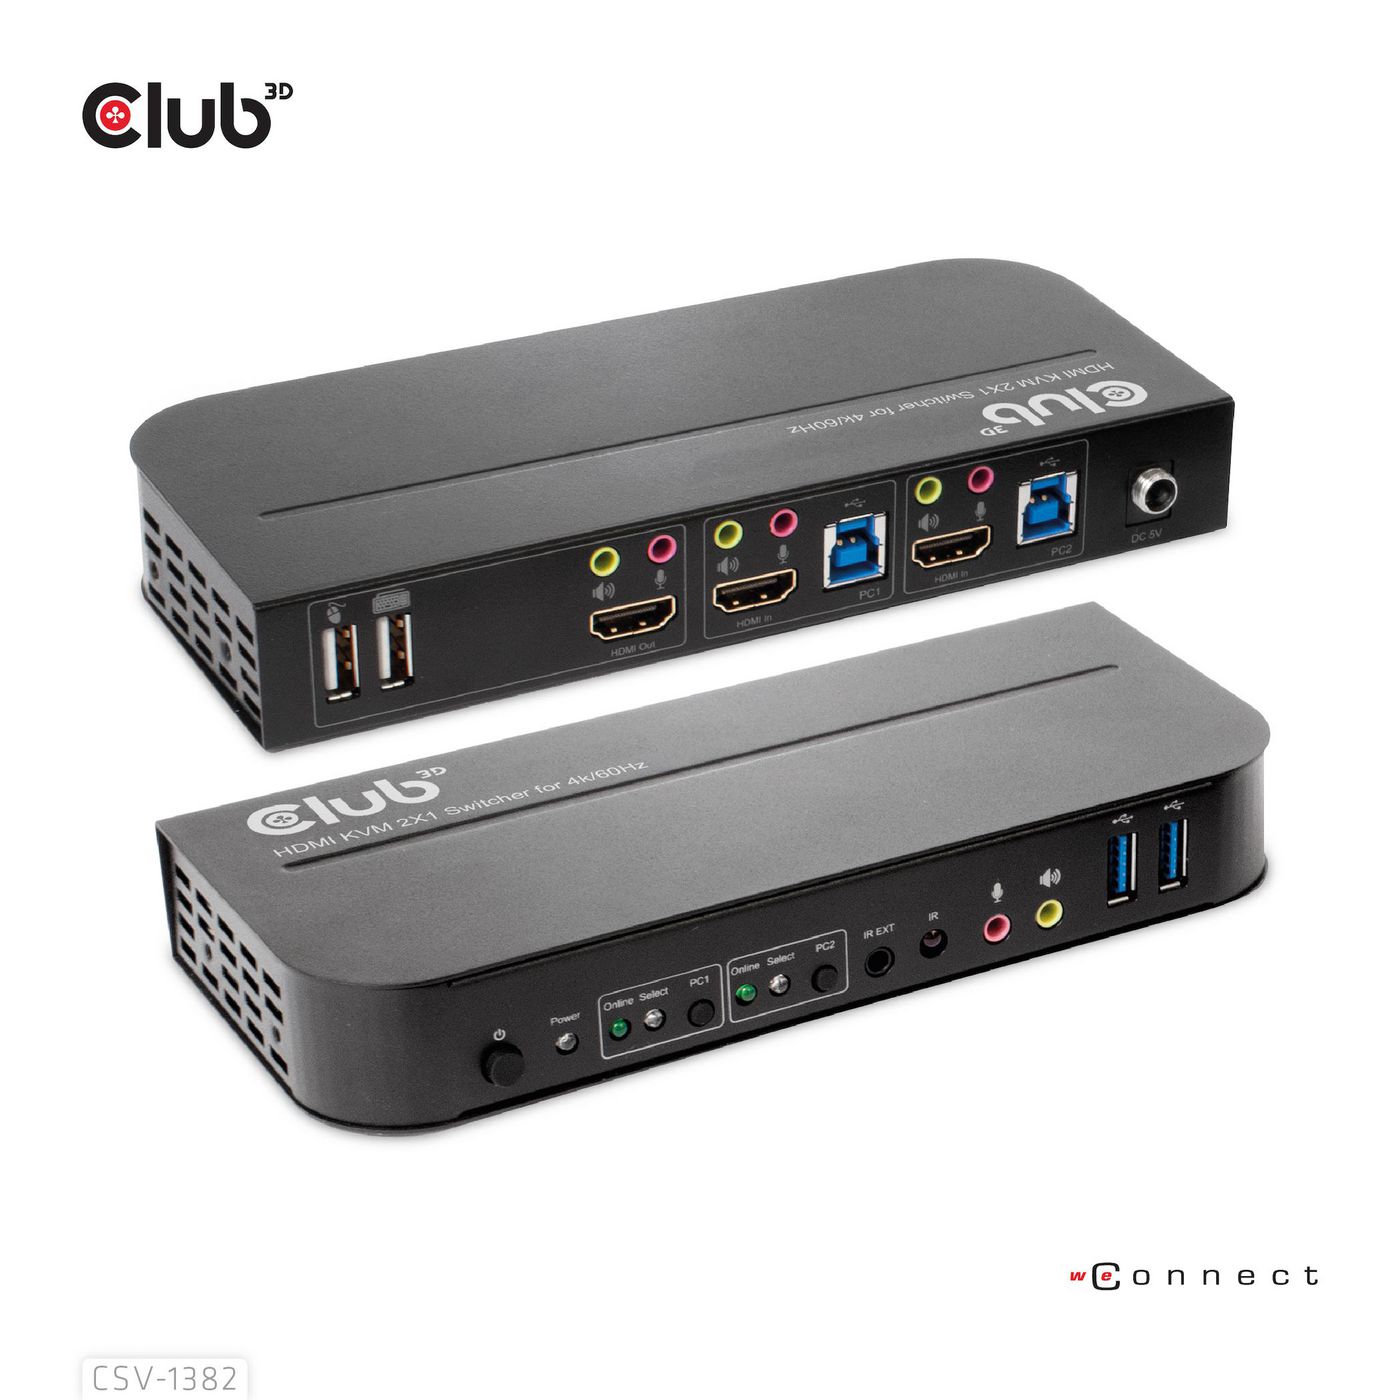 Club3D CSV-1382 W128561284 Hdmi Kvm Switch For Dual Hdmi 